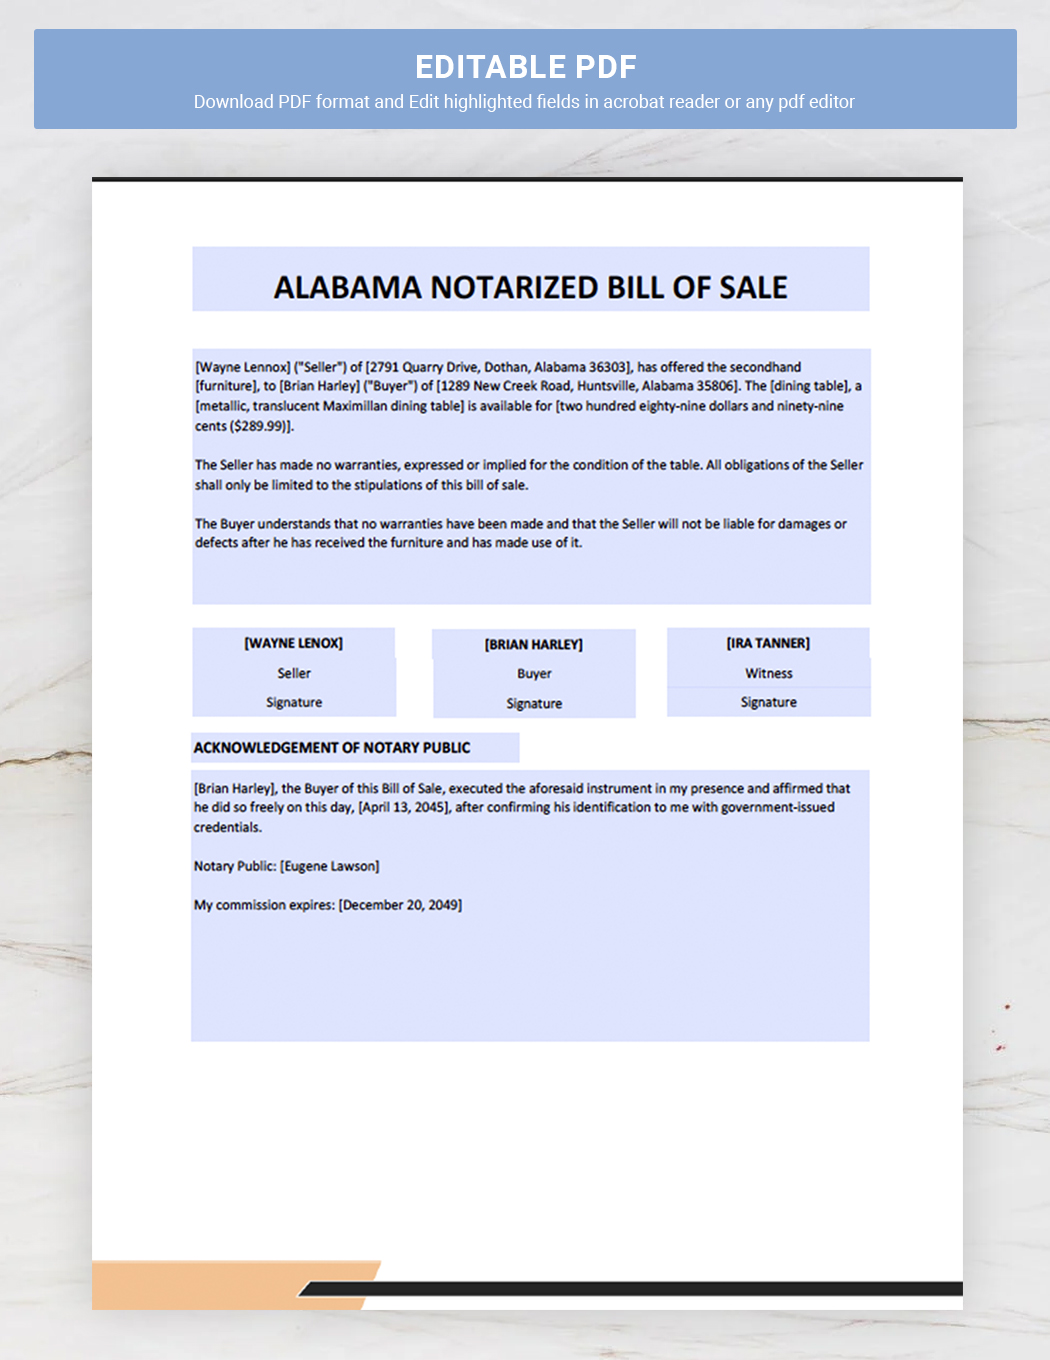 Alabama Notarized Bill of Sale Template